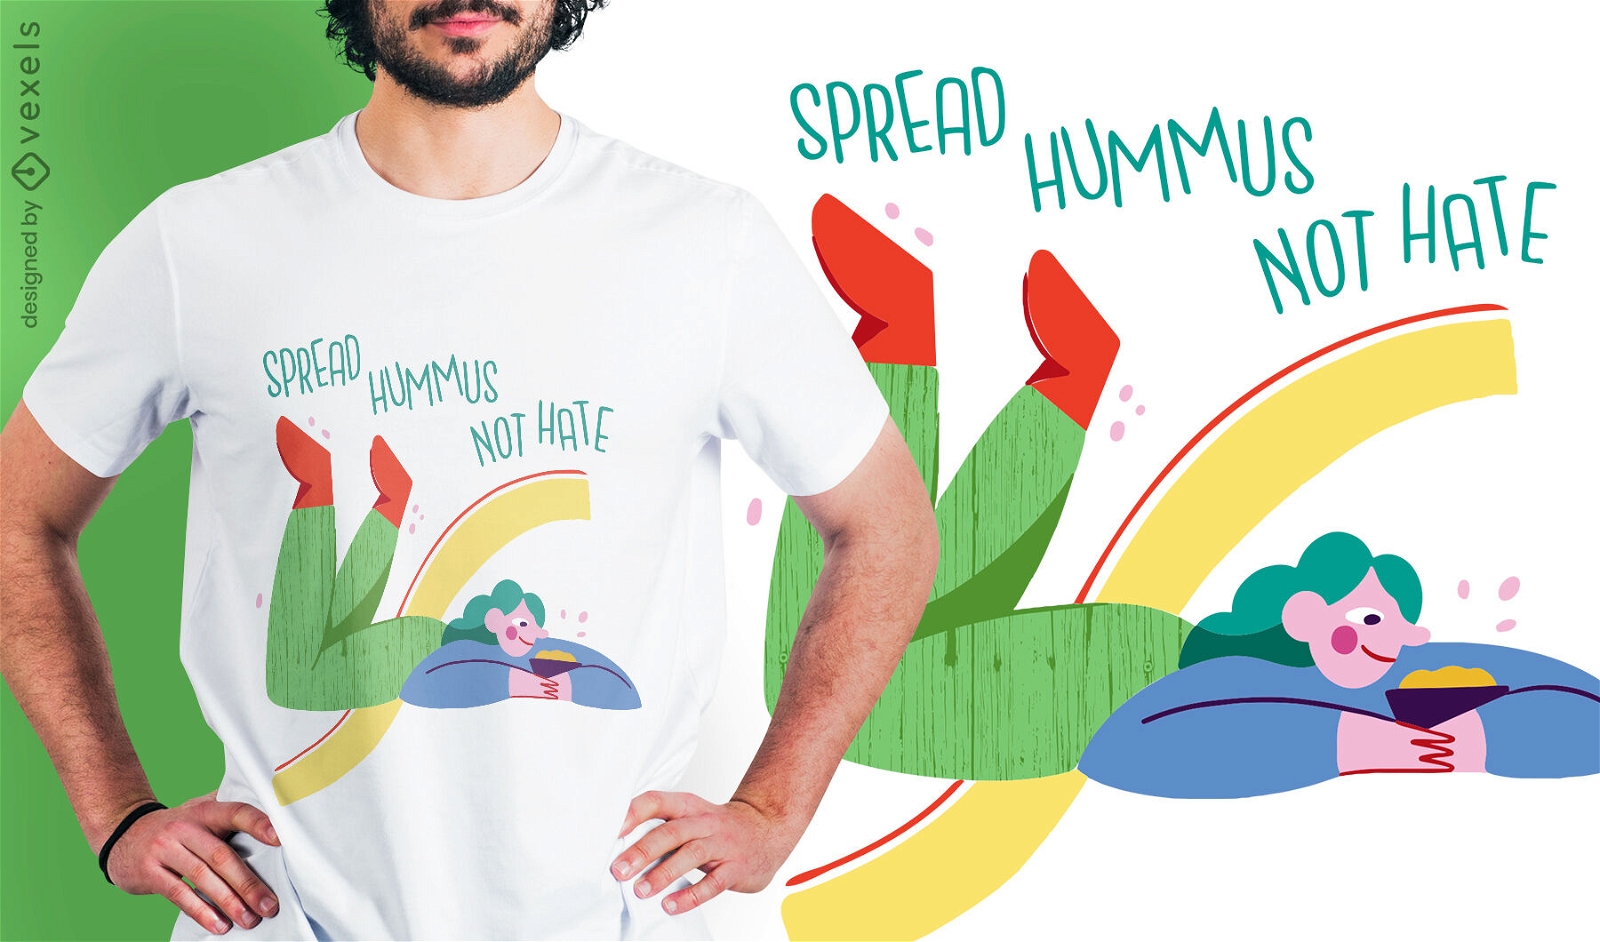 Funny vegan hummus t-shirt design